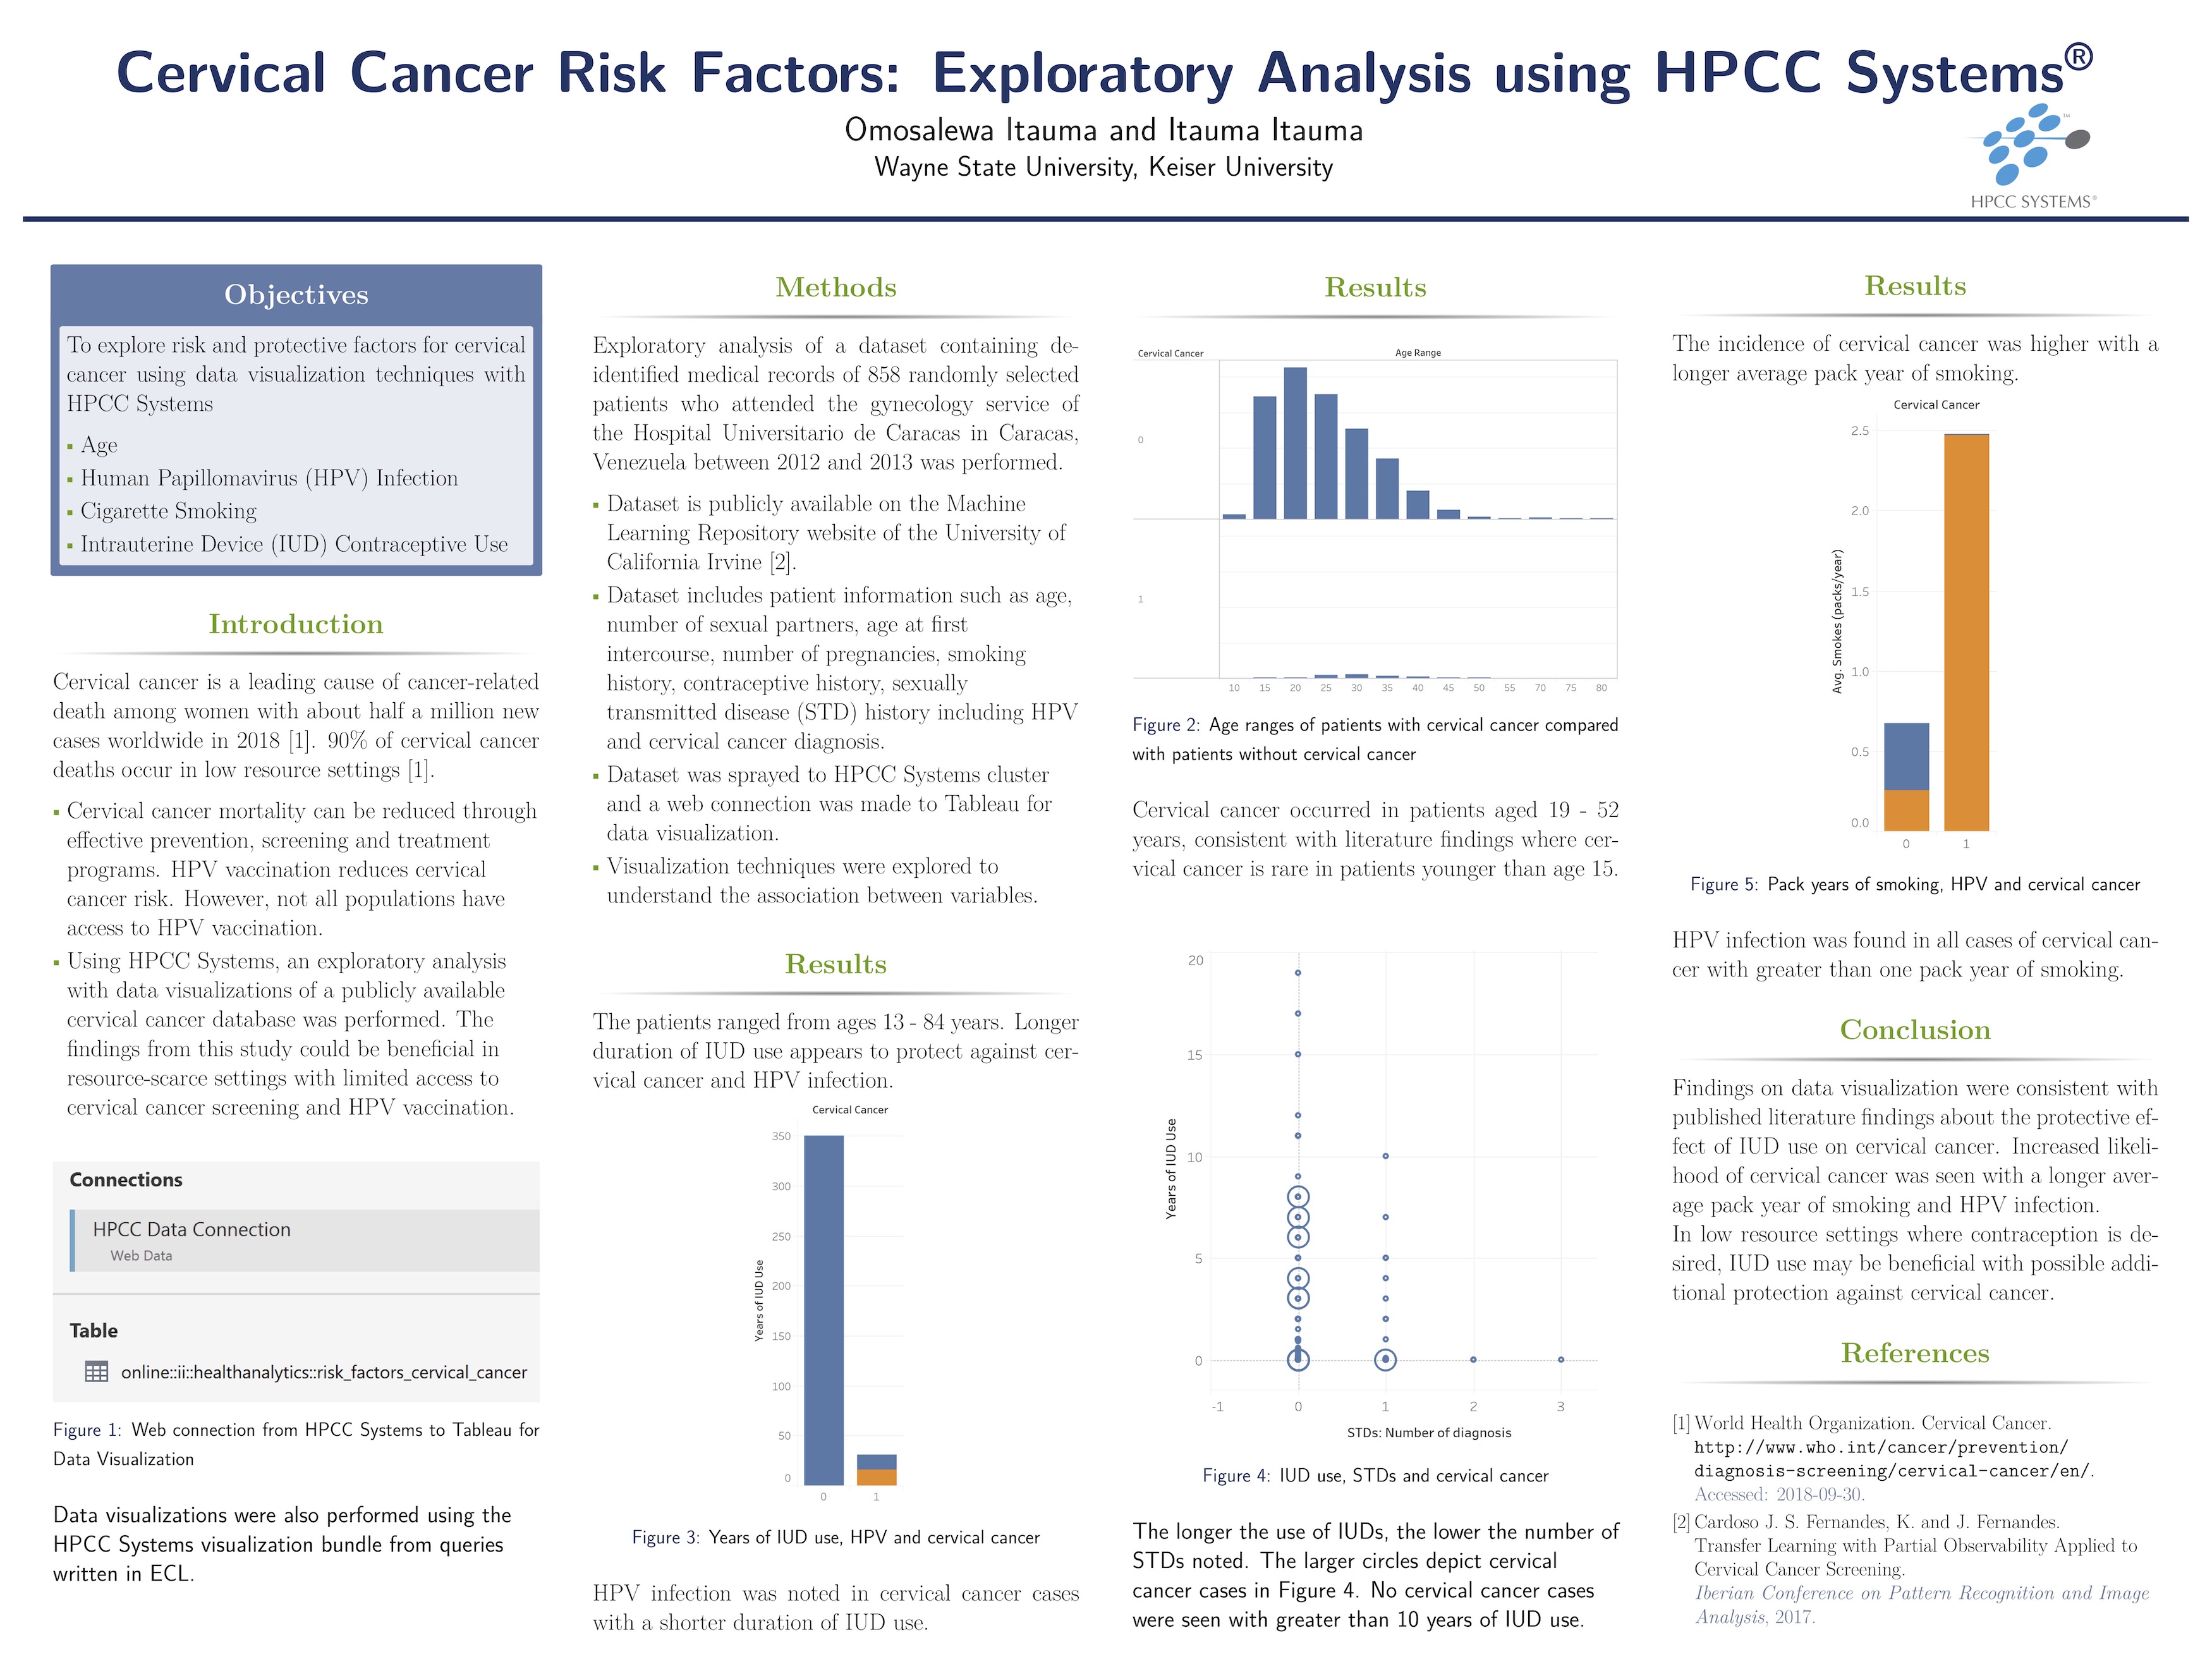 Itauma Itauma - Cervical cancer risk factors: Exploratory analysis